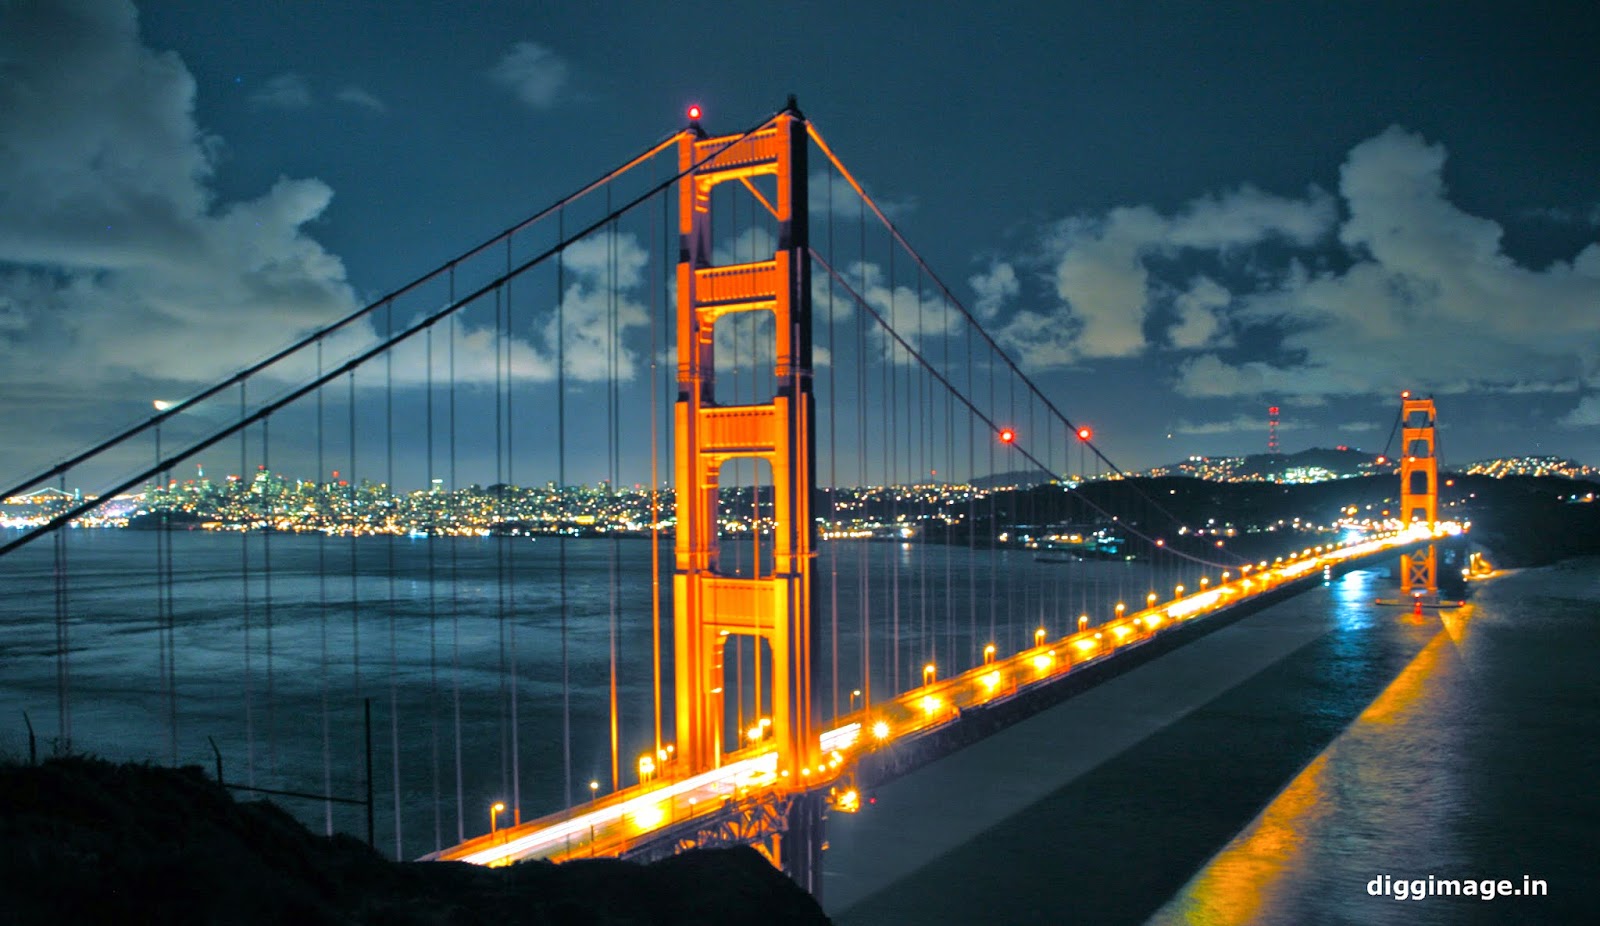 Hd Wallpapers Free Download For Pc - Night Golden Gate Bridge - HD Wallpaper 